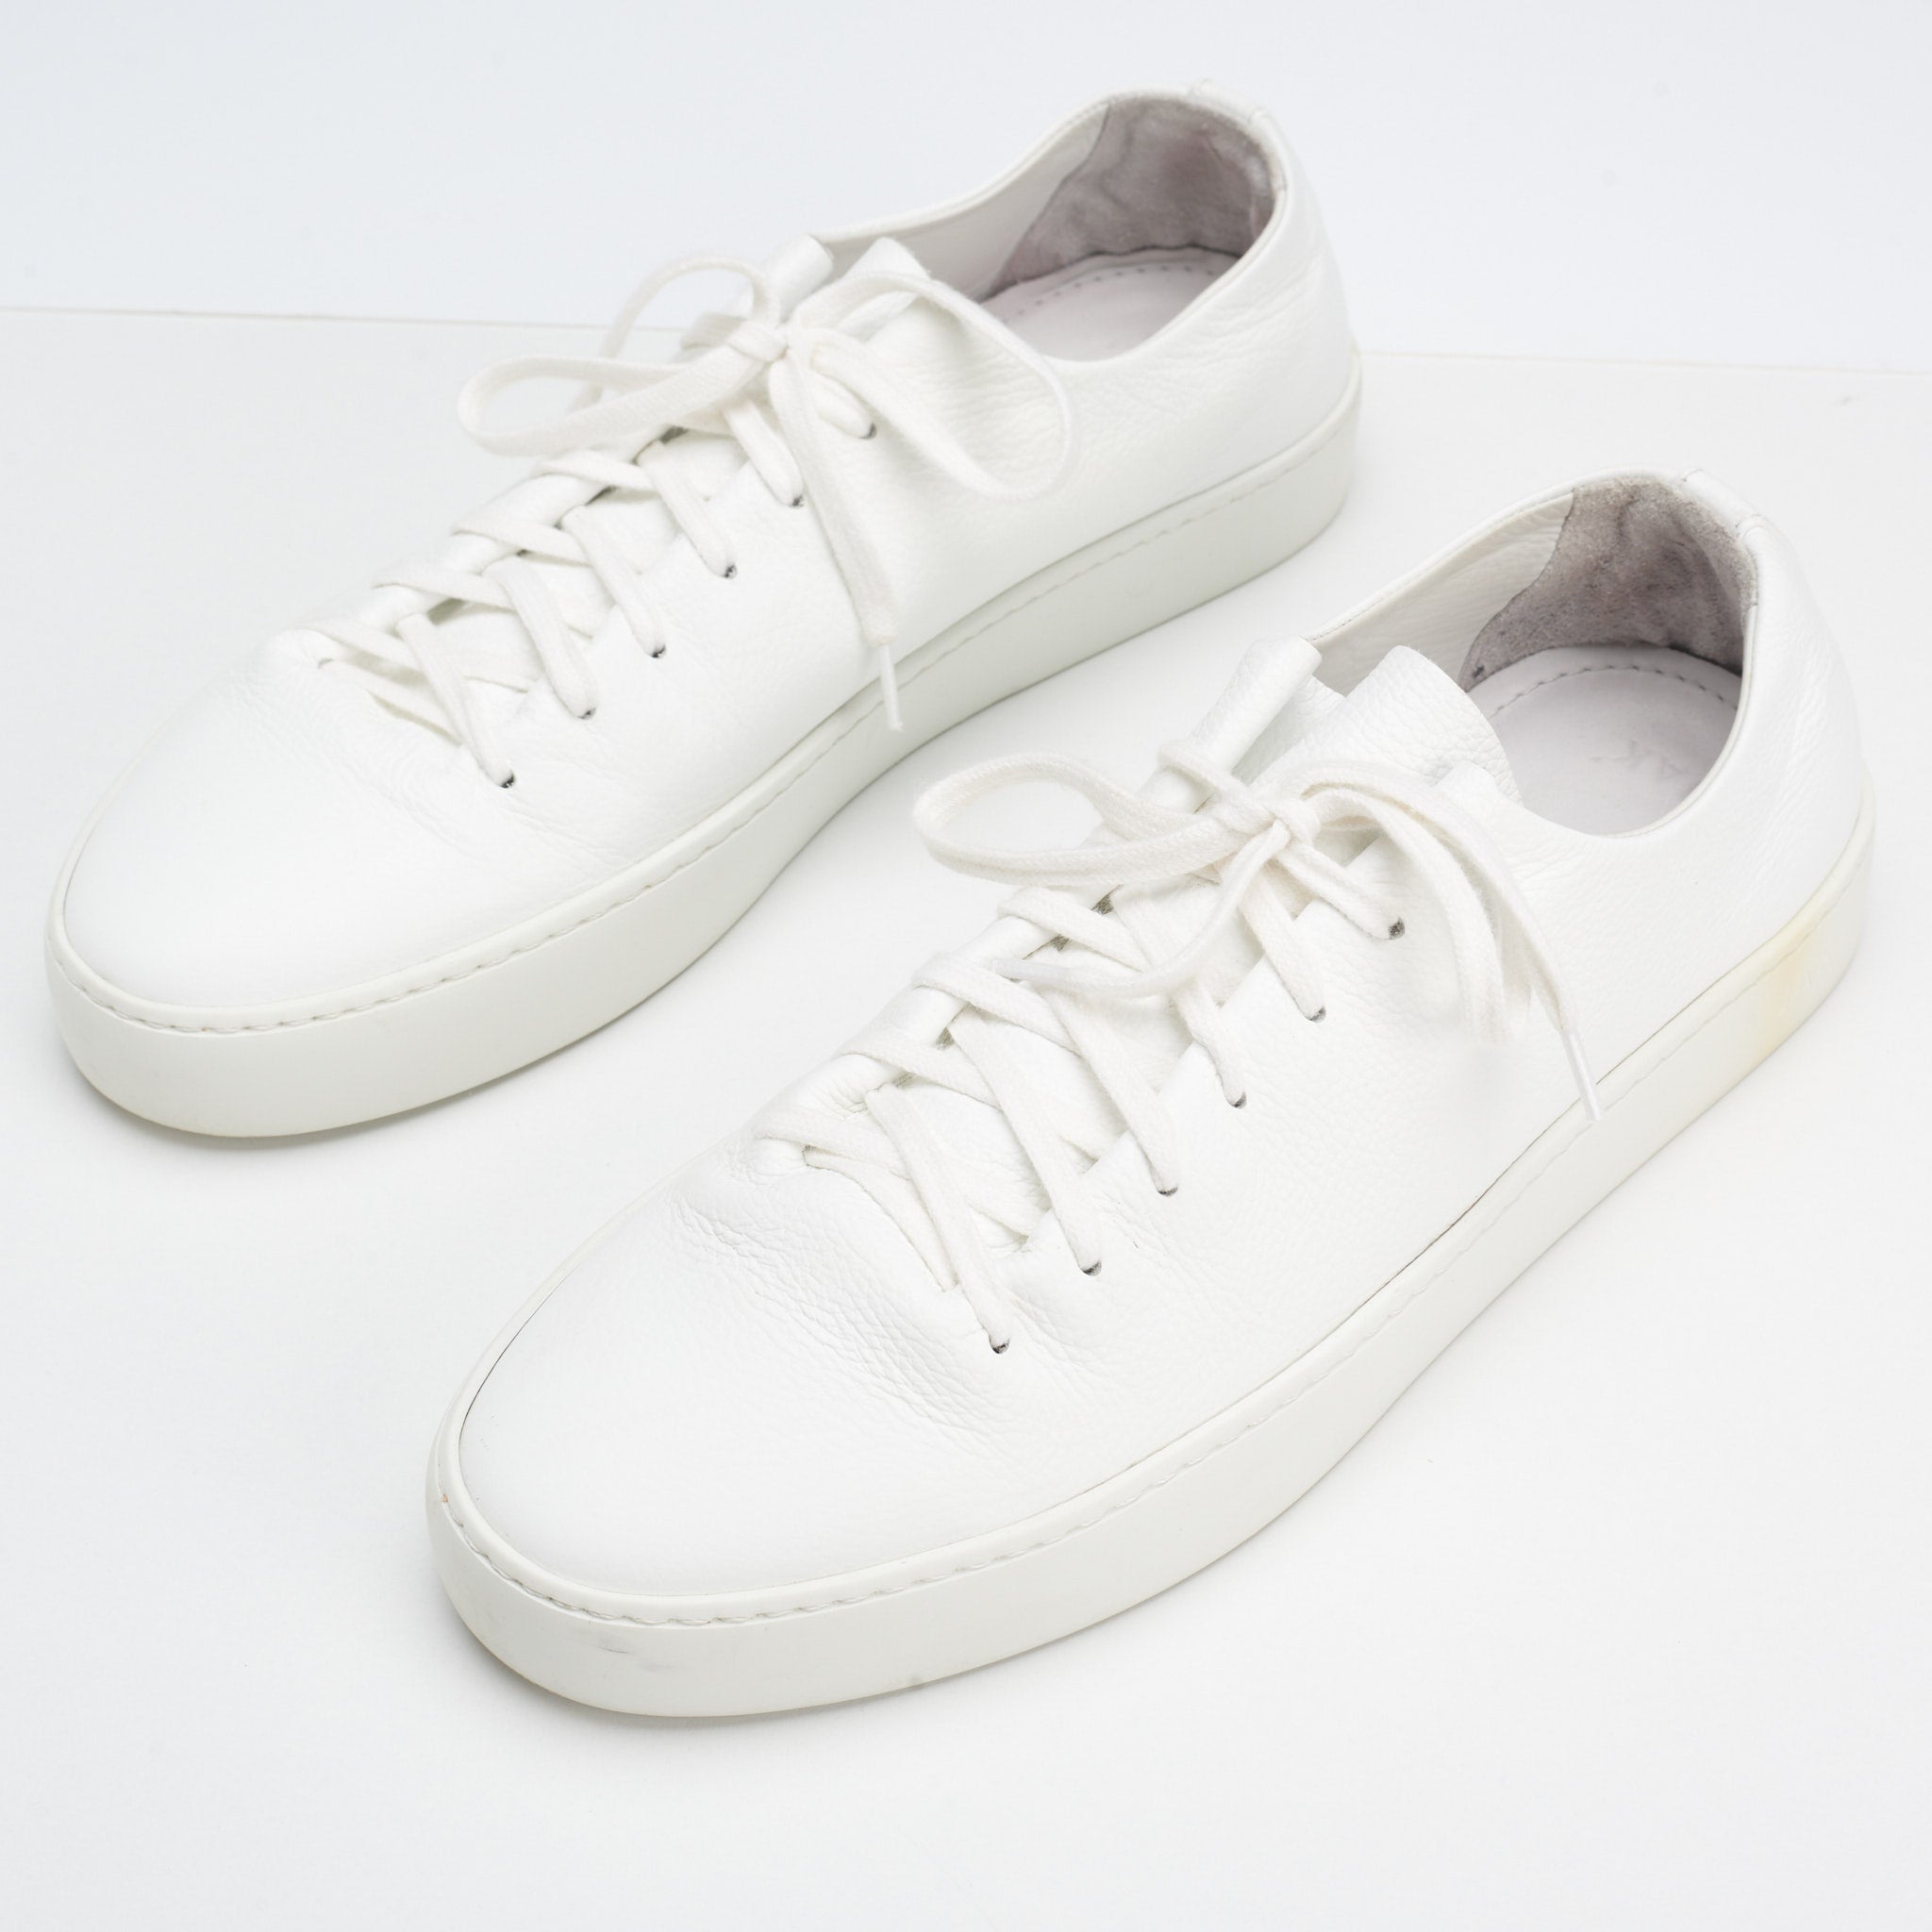 JAK "Atom" All White Full Grain Calf Leather Low-Top Sneaker Shoes EU 42 US 9 JAK